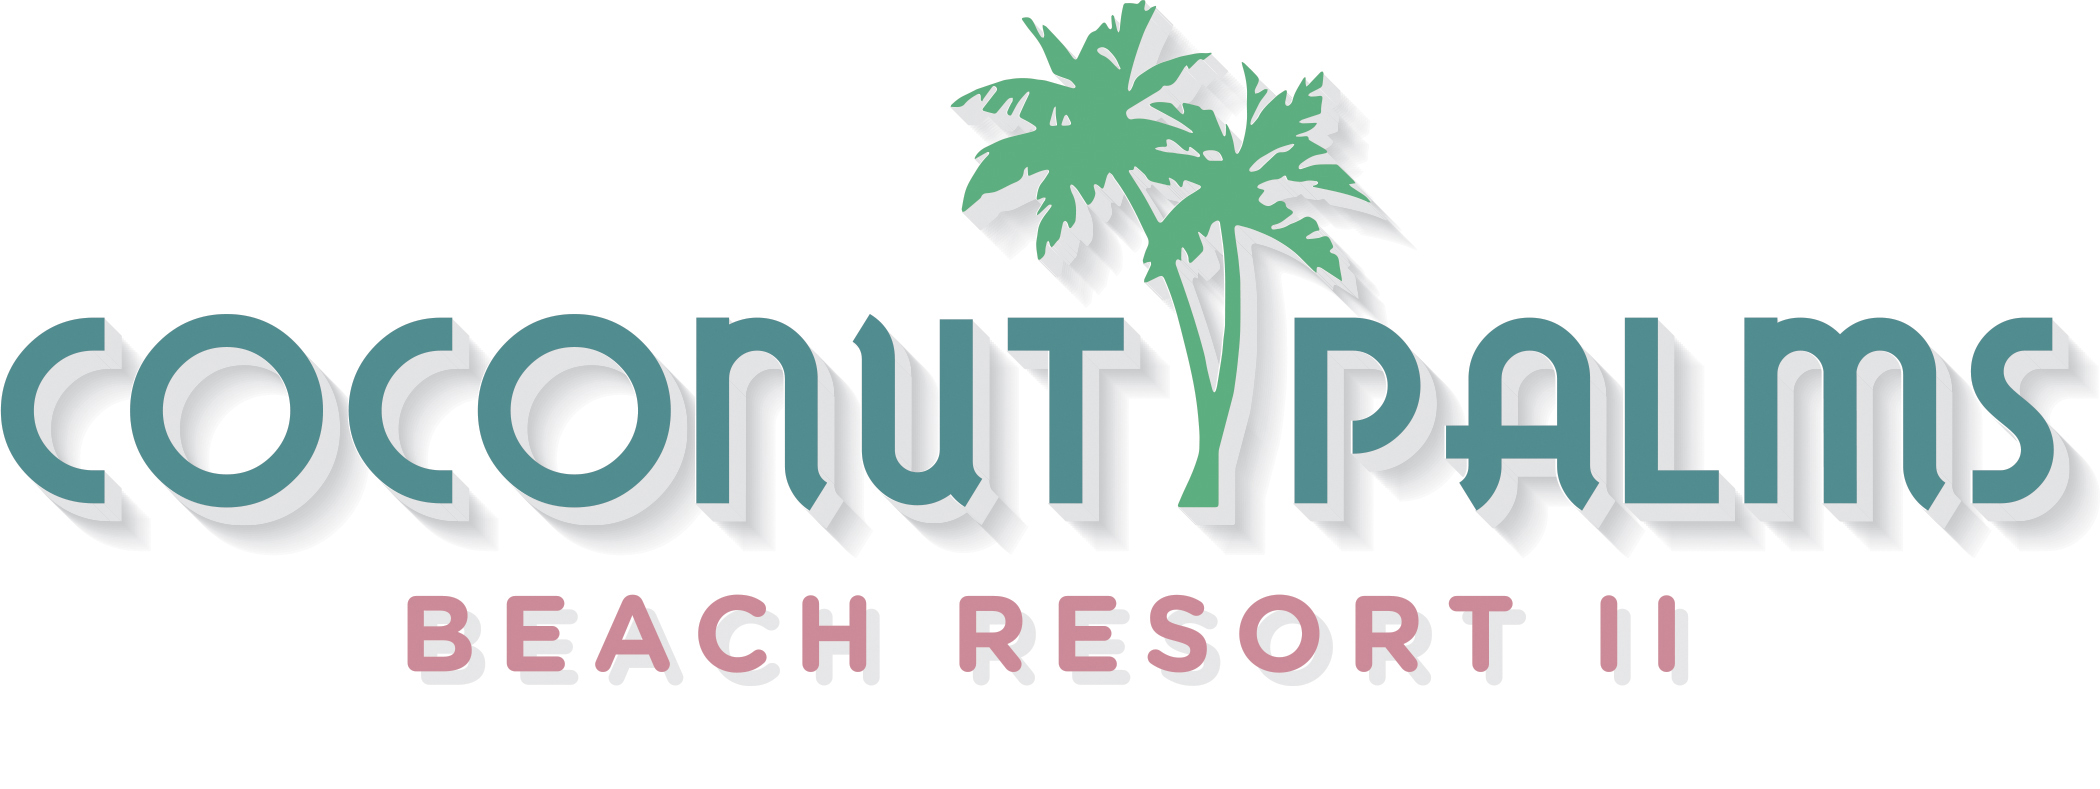 Coconut Palms Beach Resort II: Your Tropical Paradise Awaits